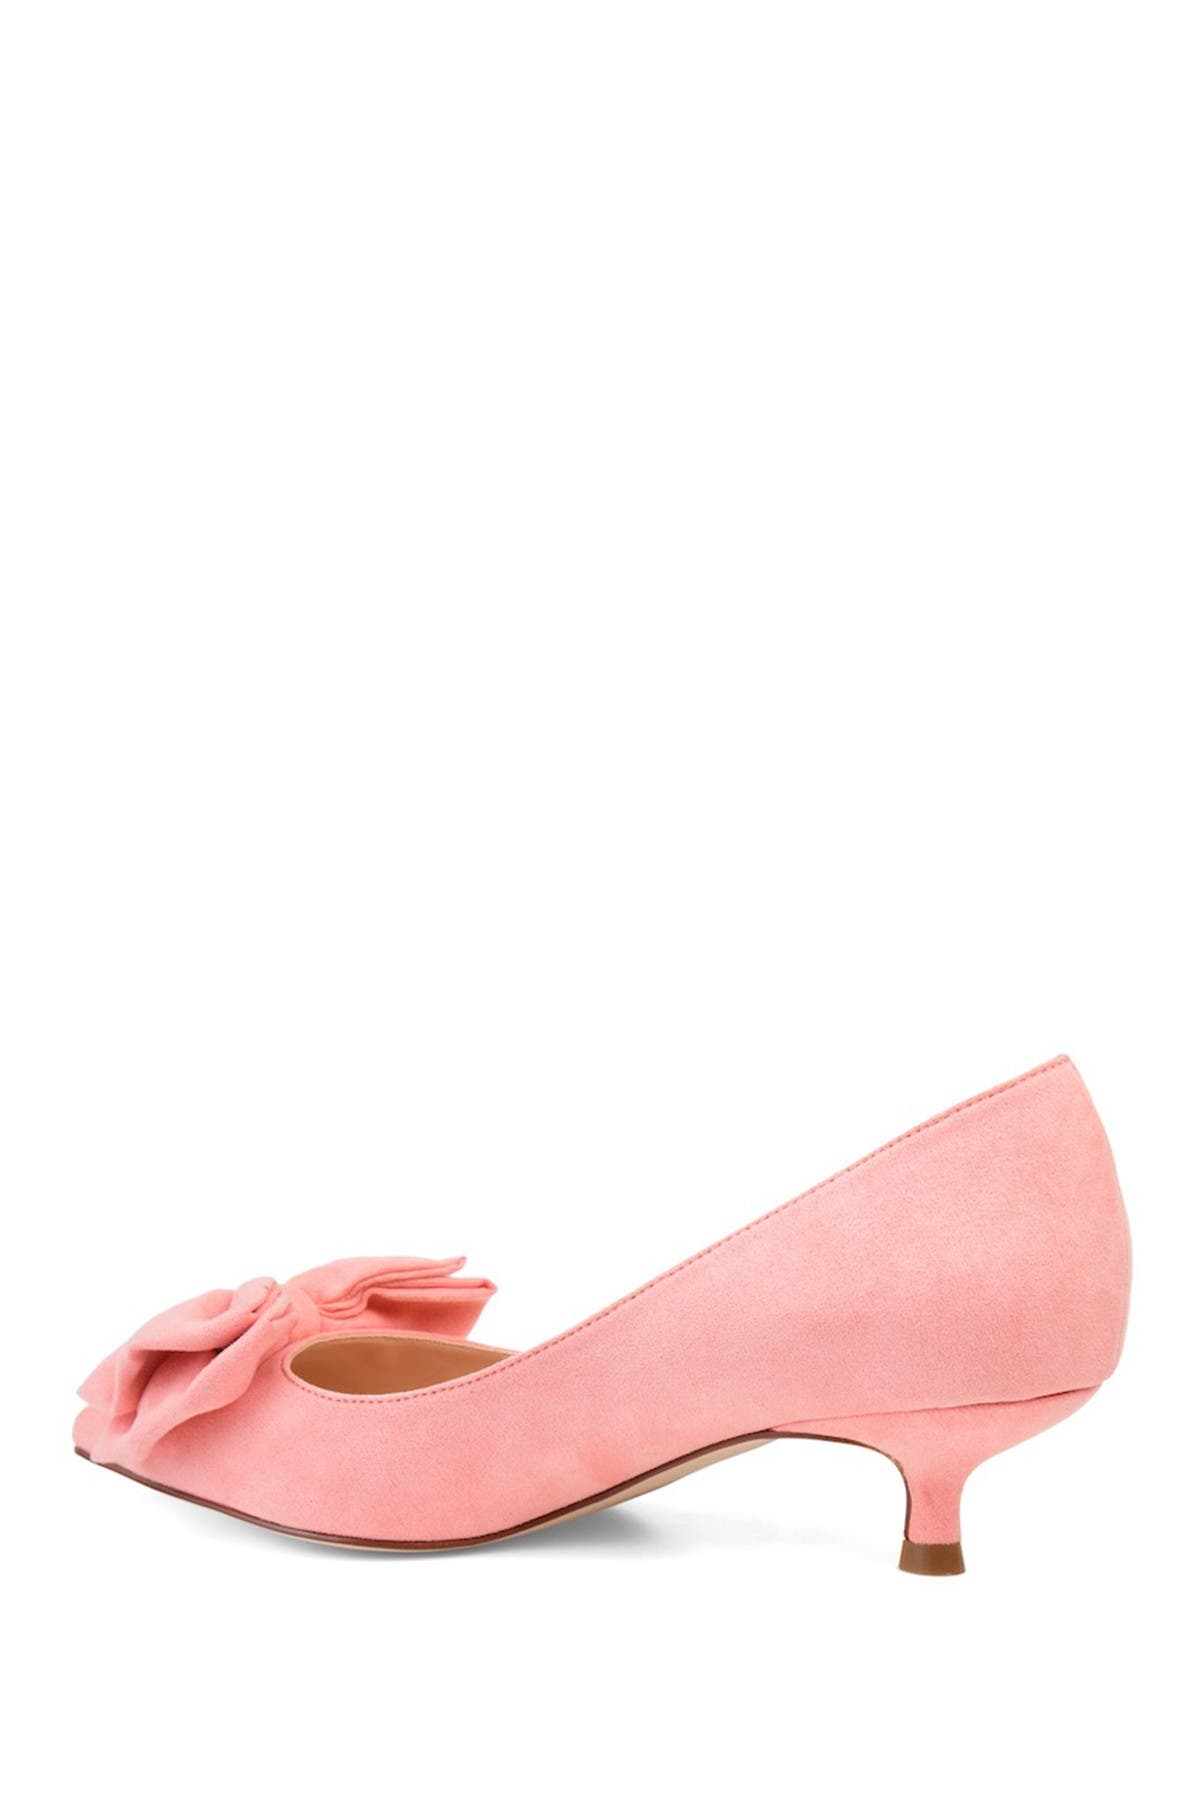 Journee Collection Orana Bow Kitten Heel Pump In Medium Pink5